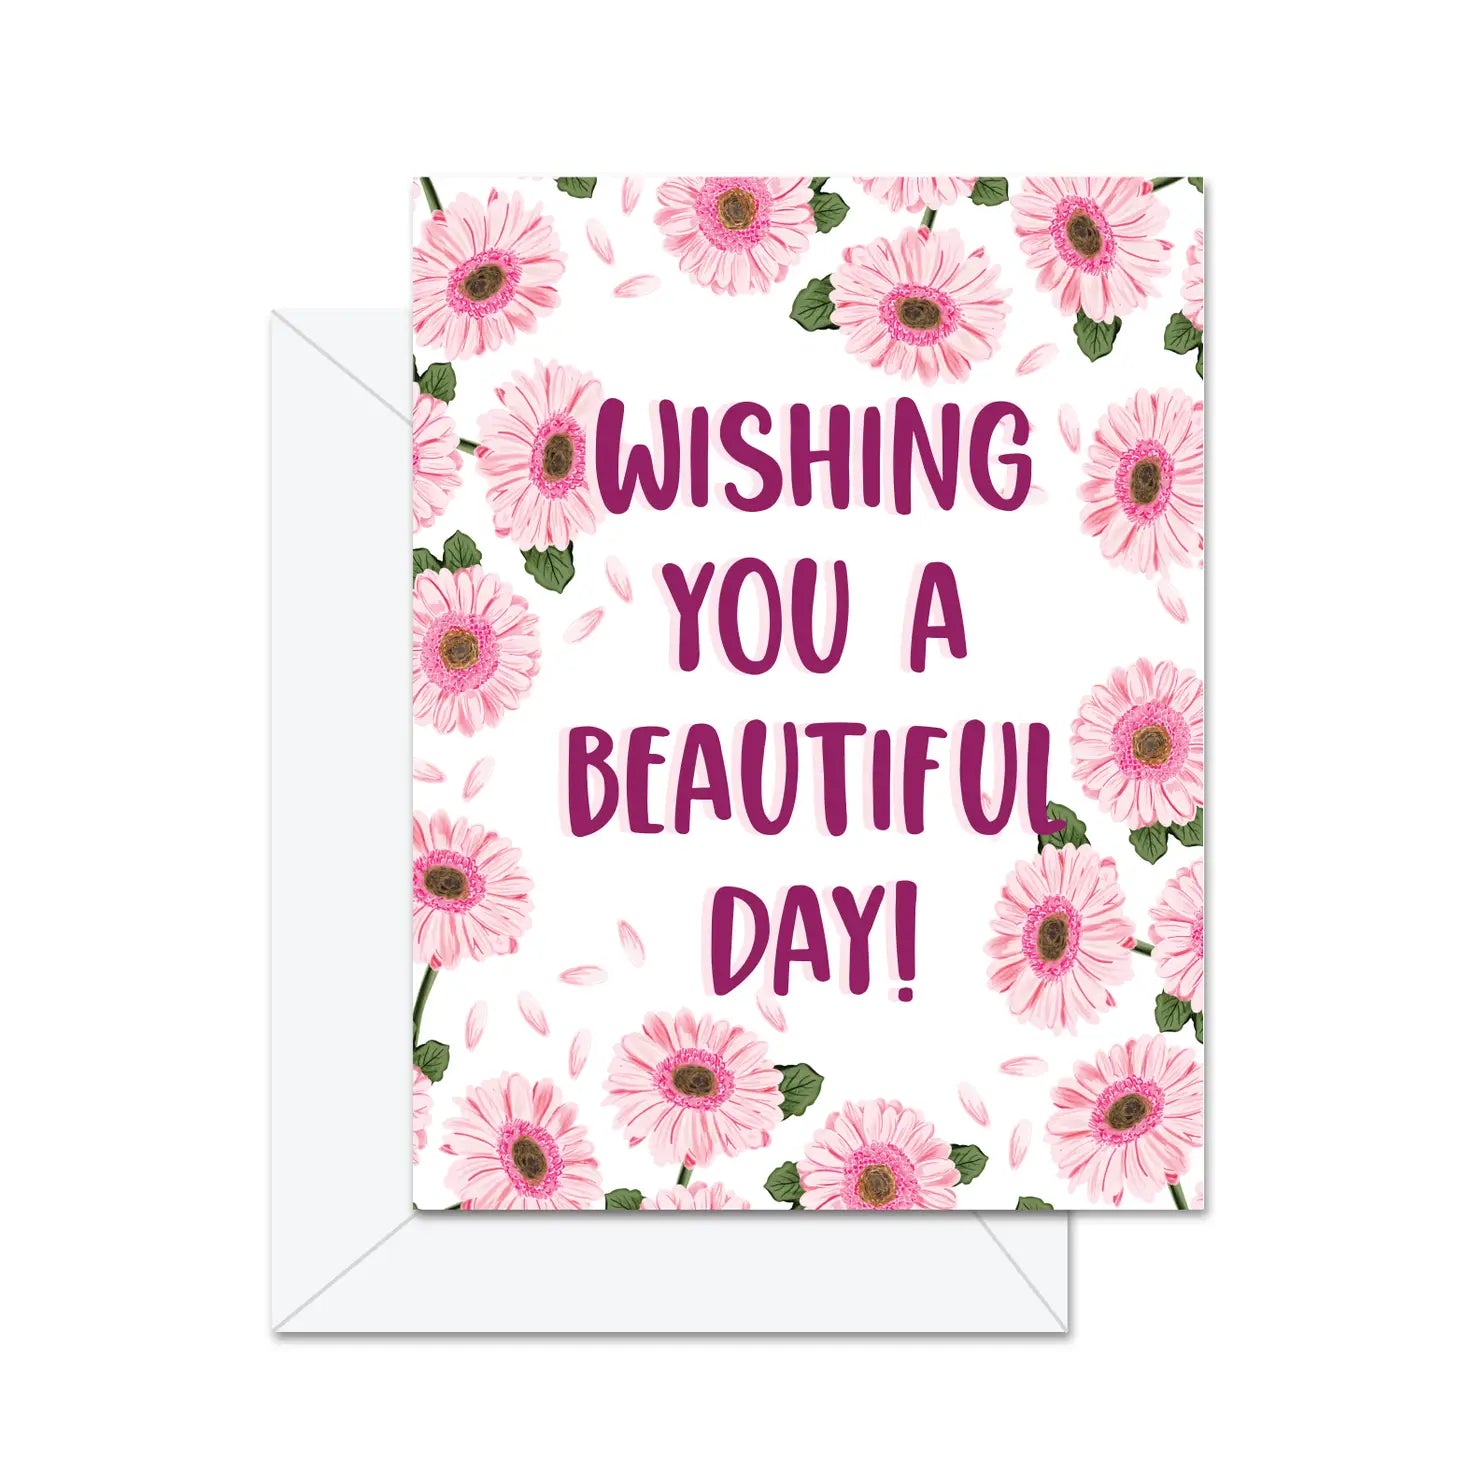 Wishing You A Beautiful Day- Greeting Card